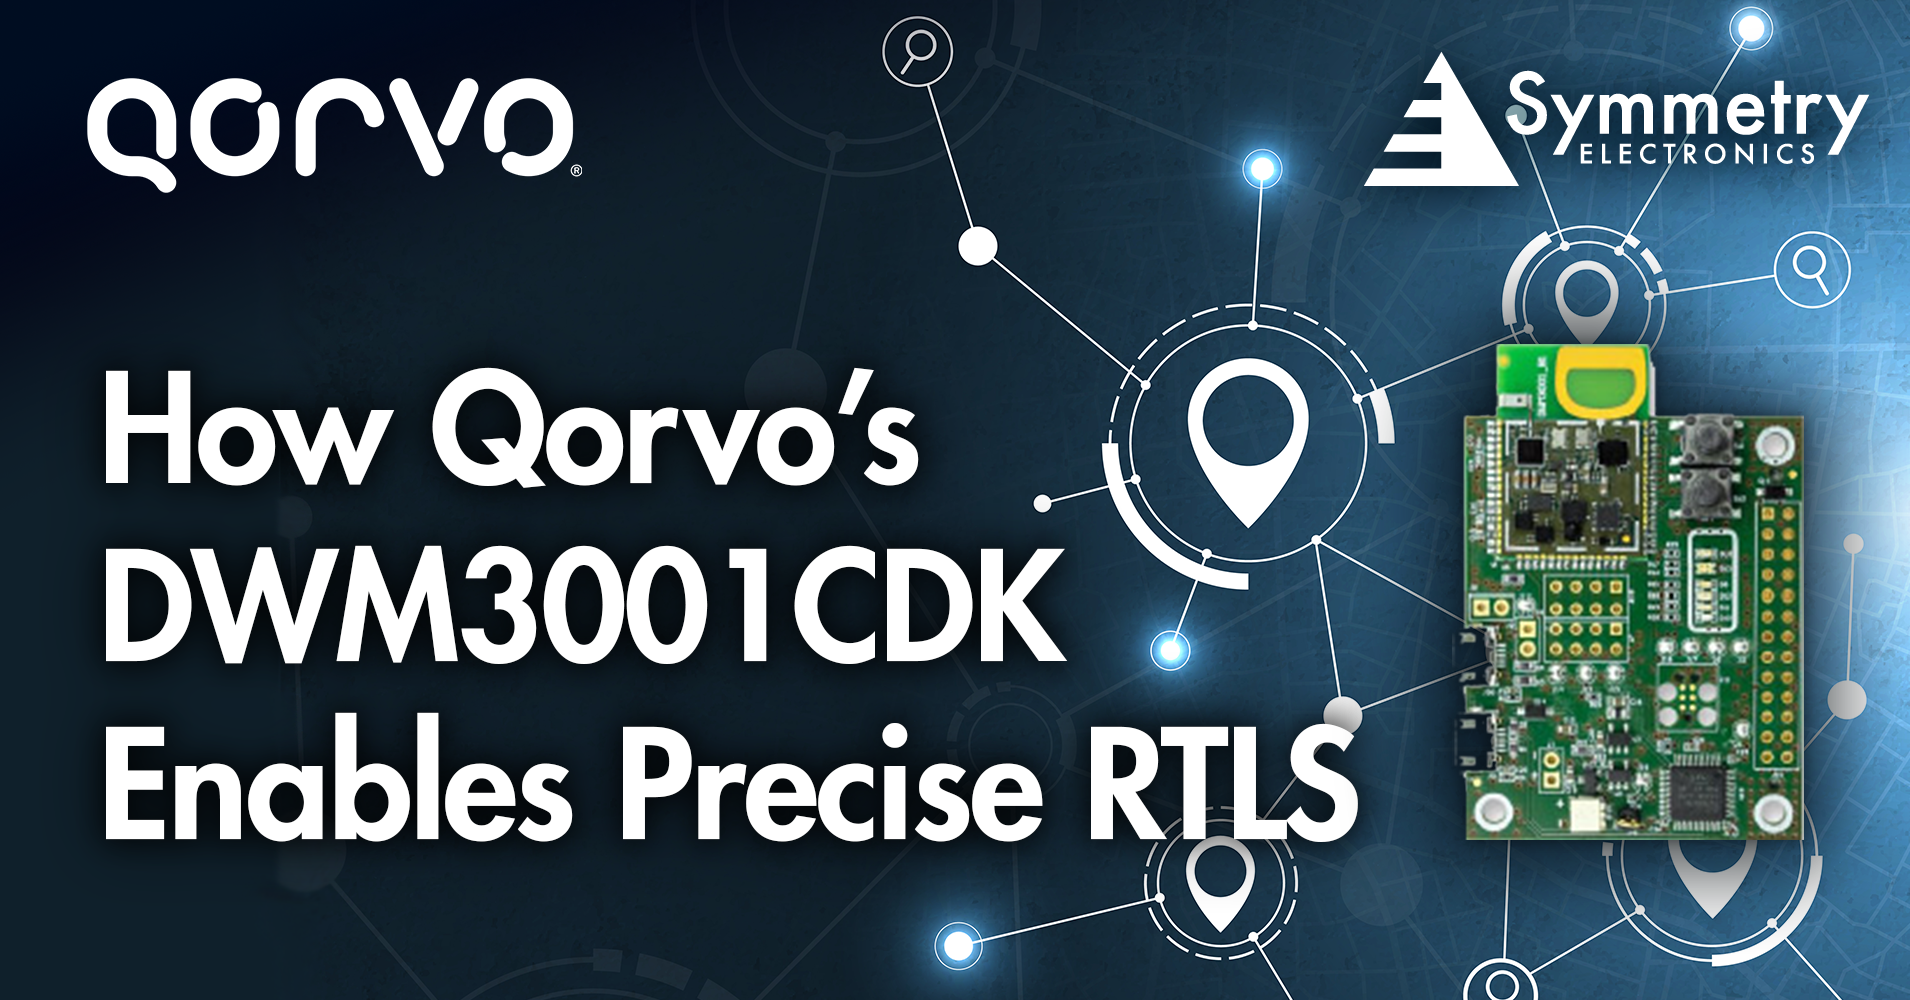 Qorvo's-DWM3001CDK-Is-Available-At-Symmetry-Electronics